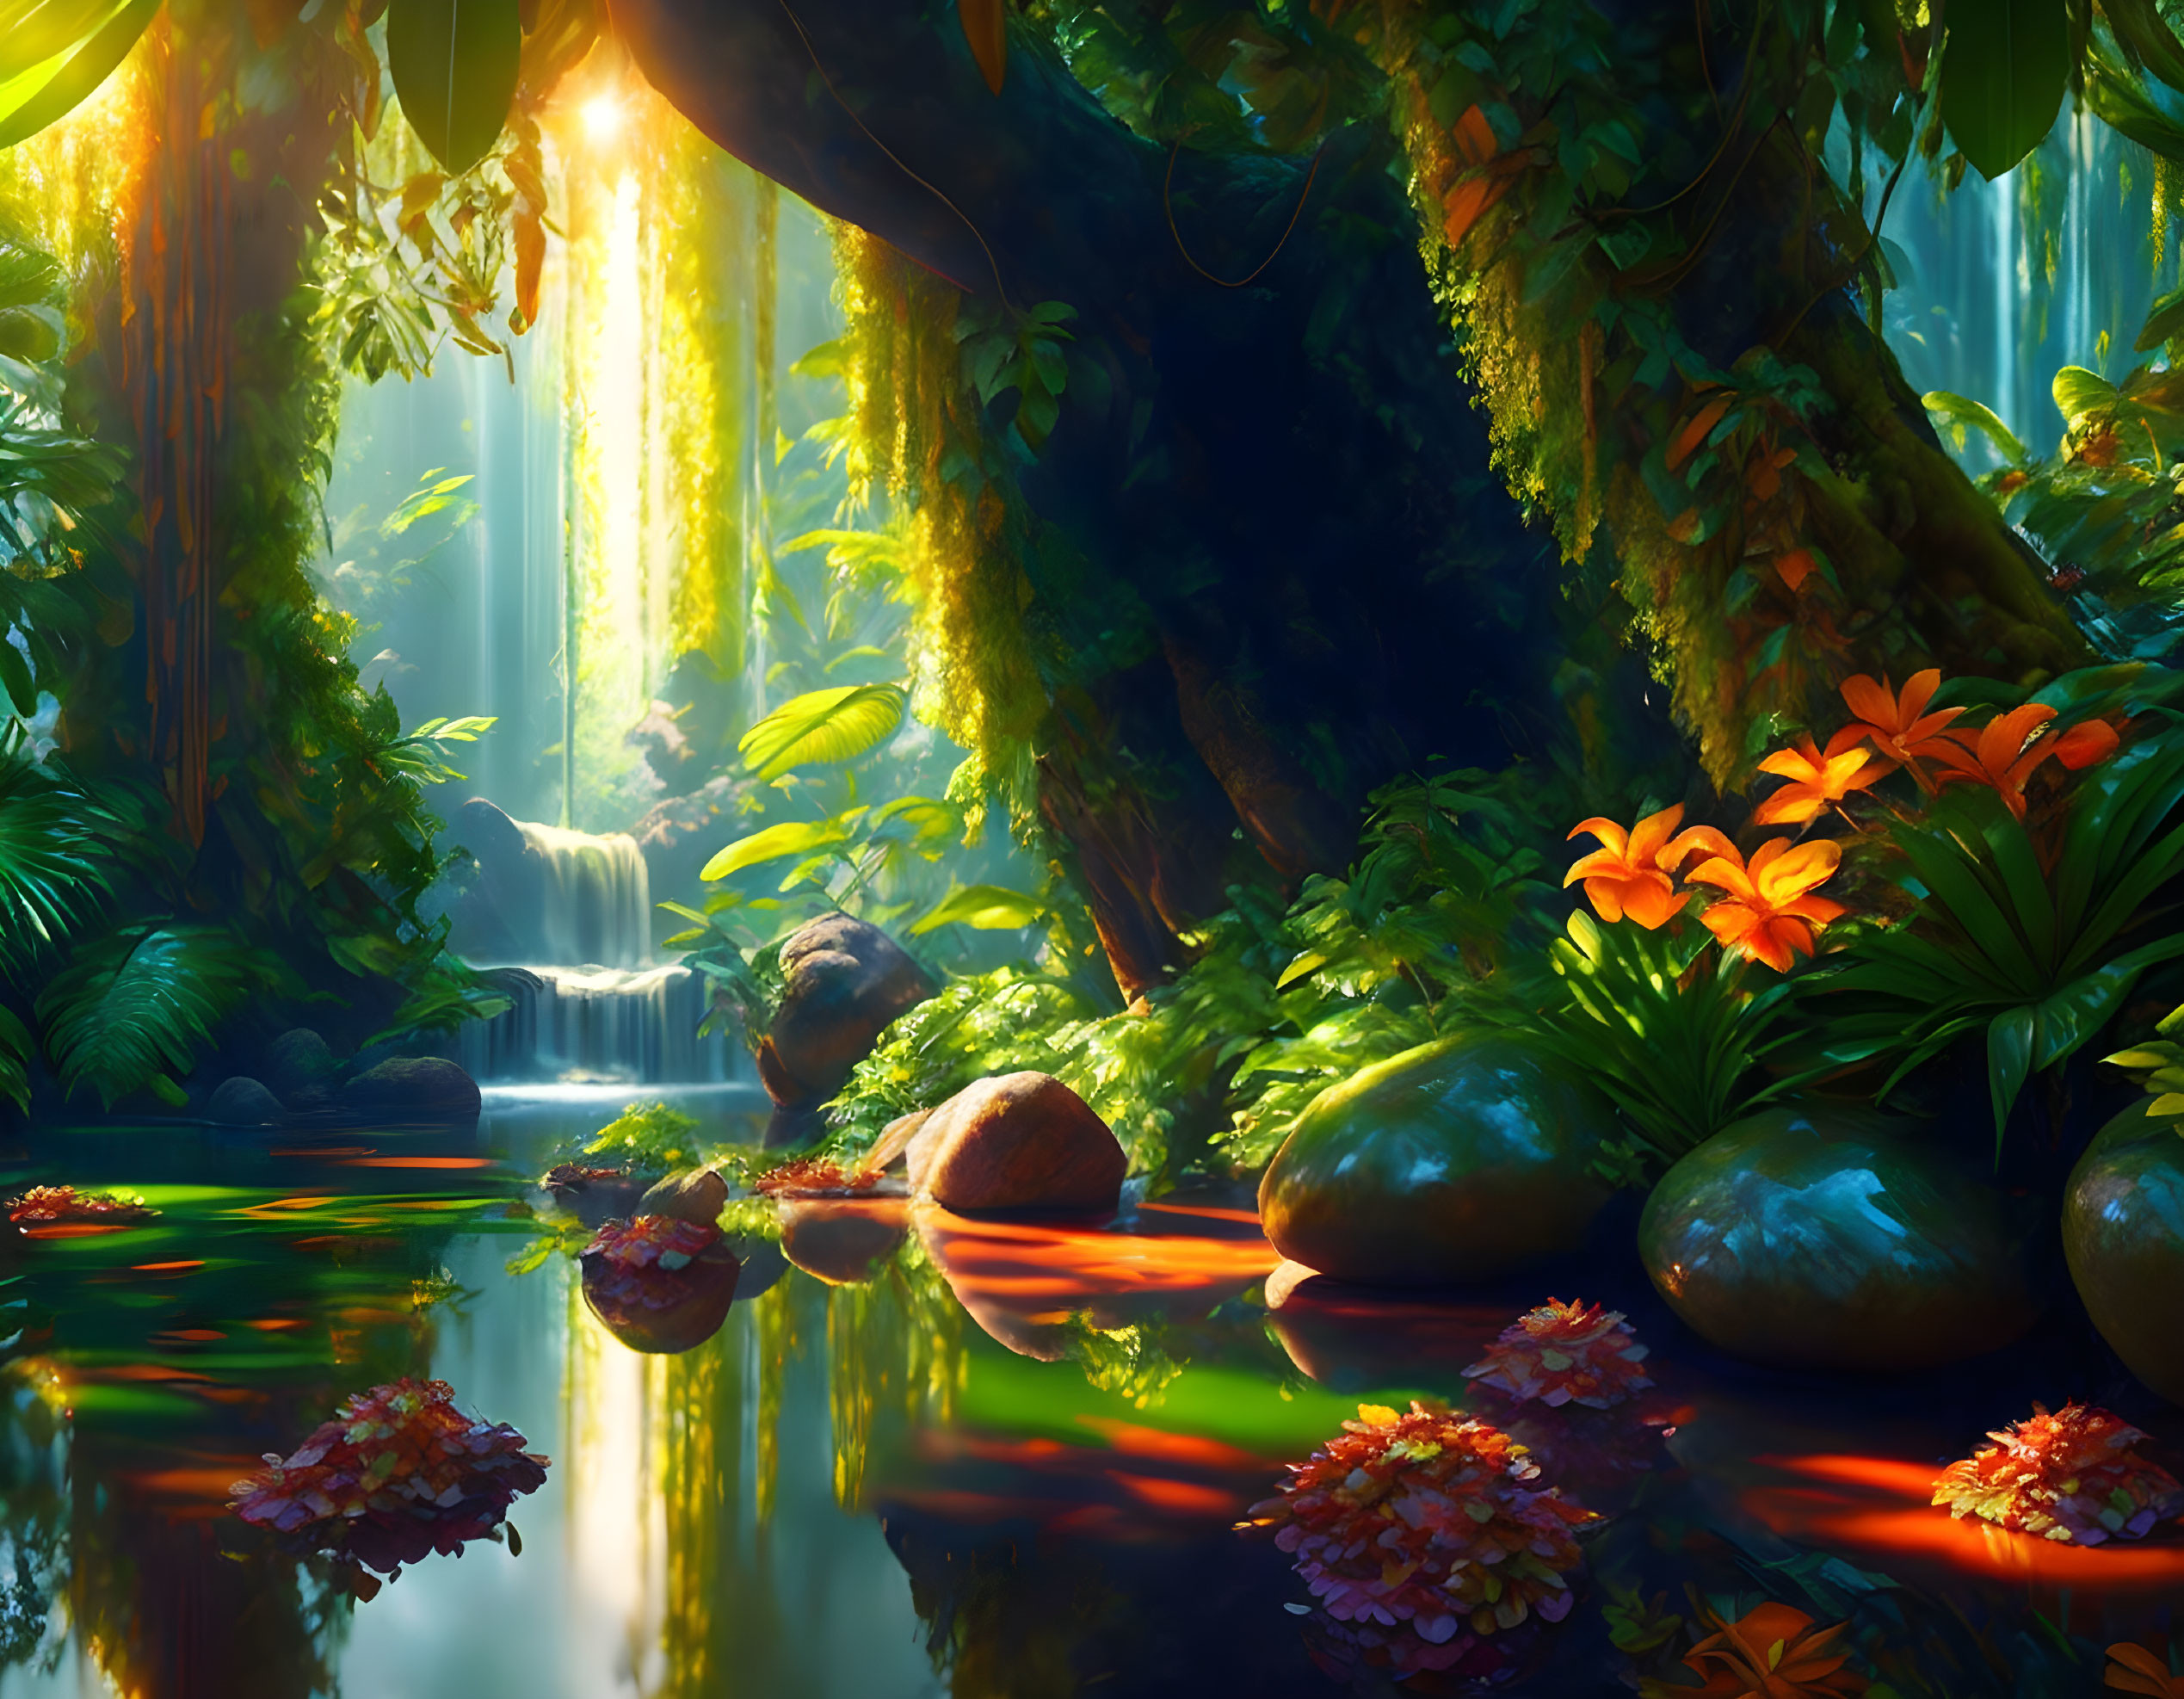 Beautiful image of the jungle